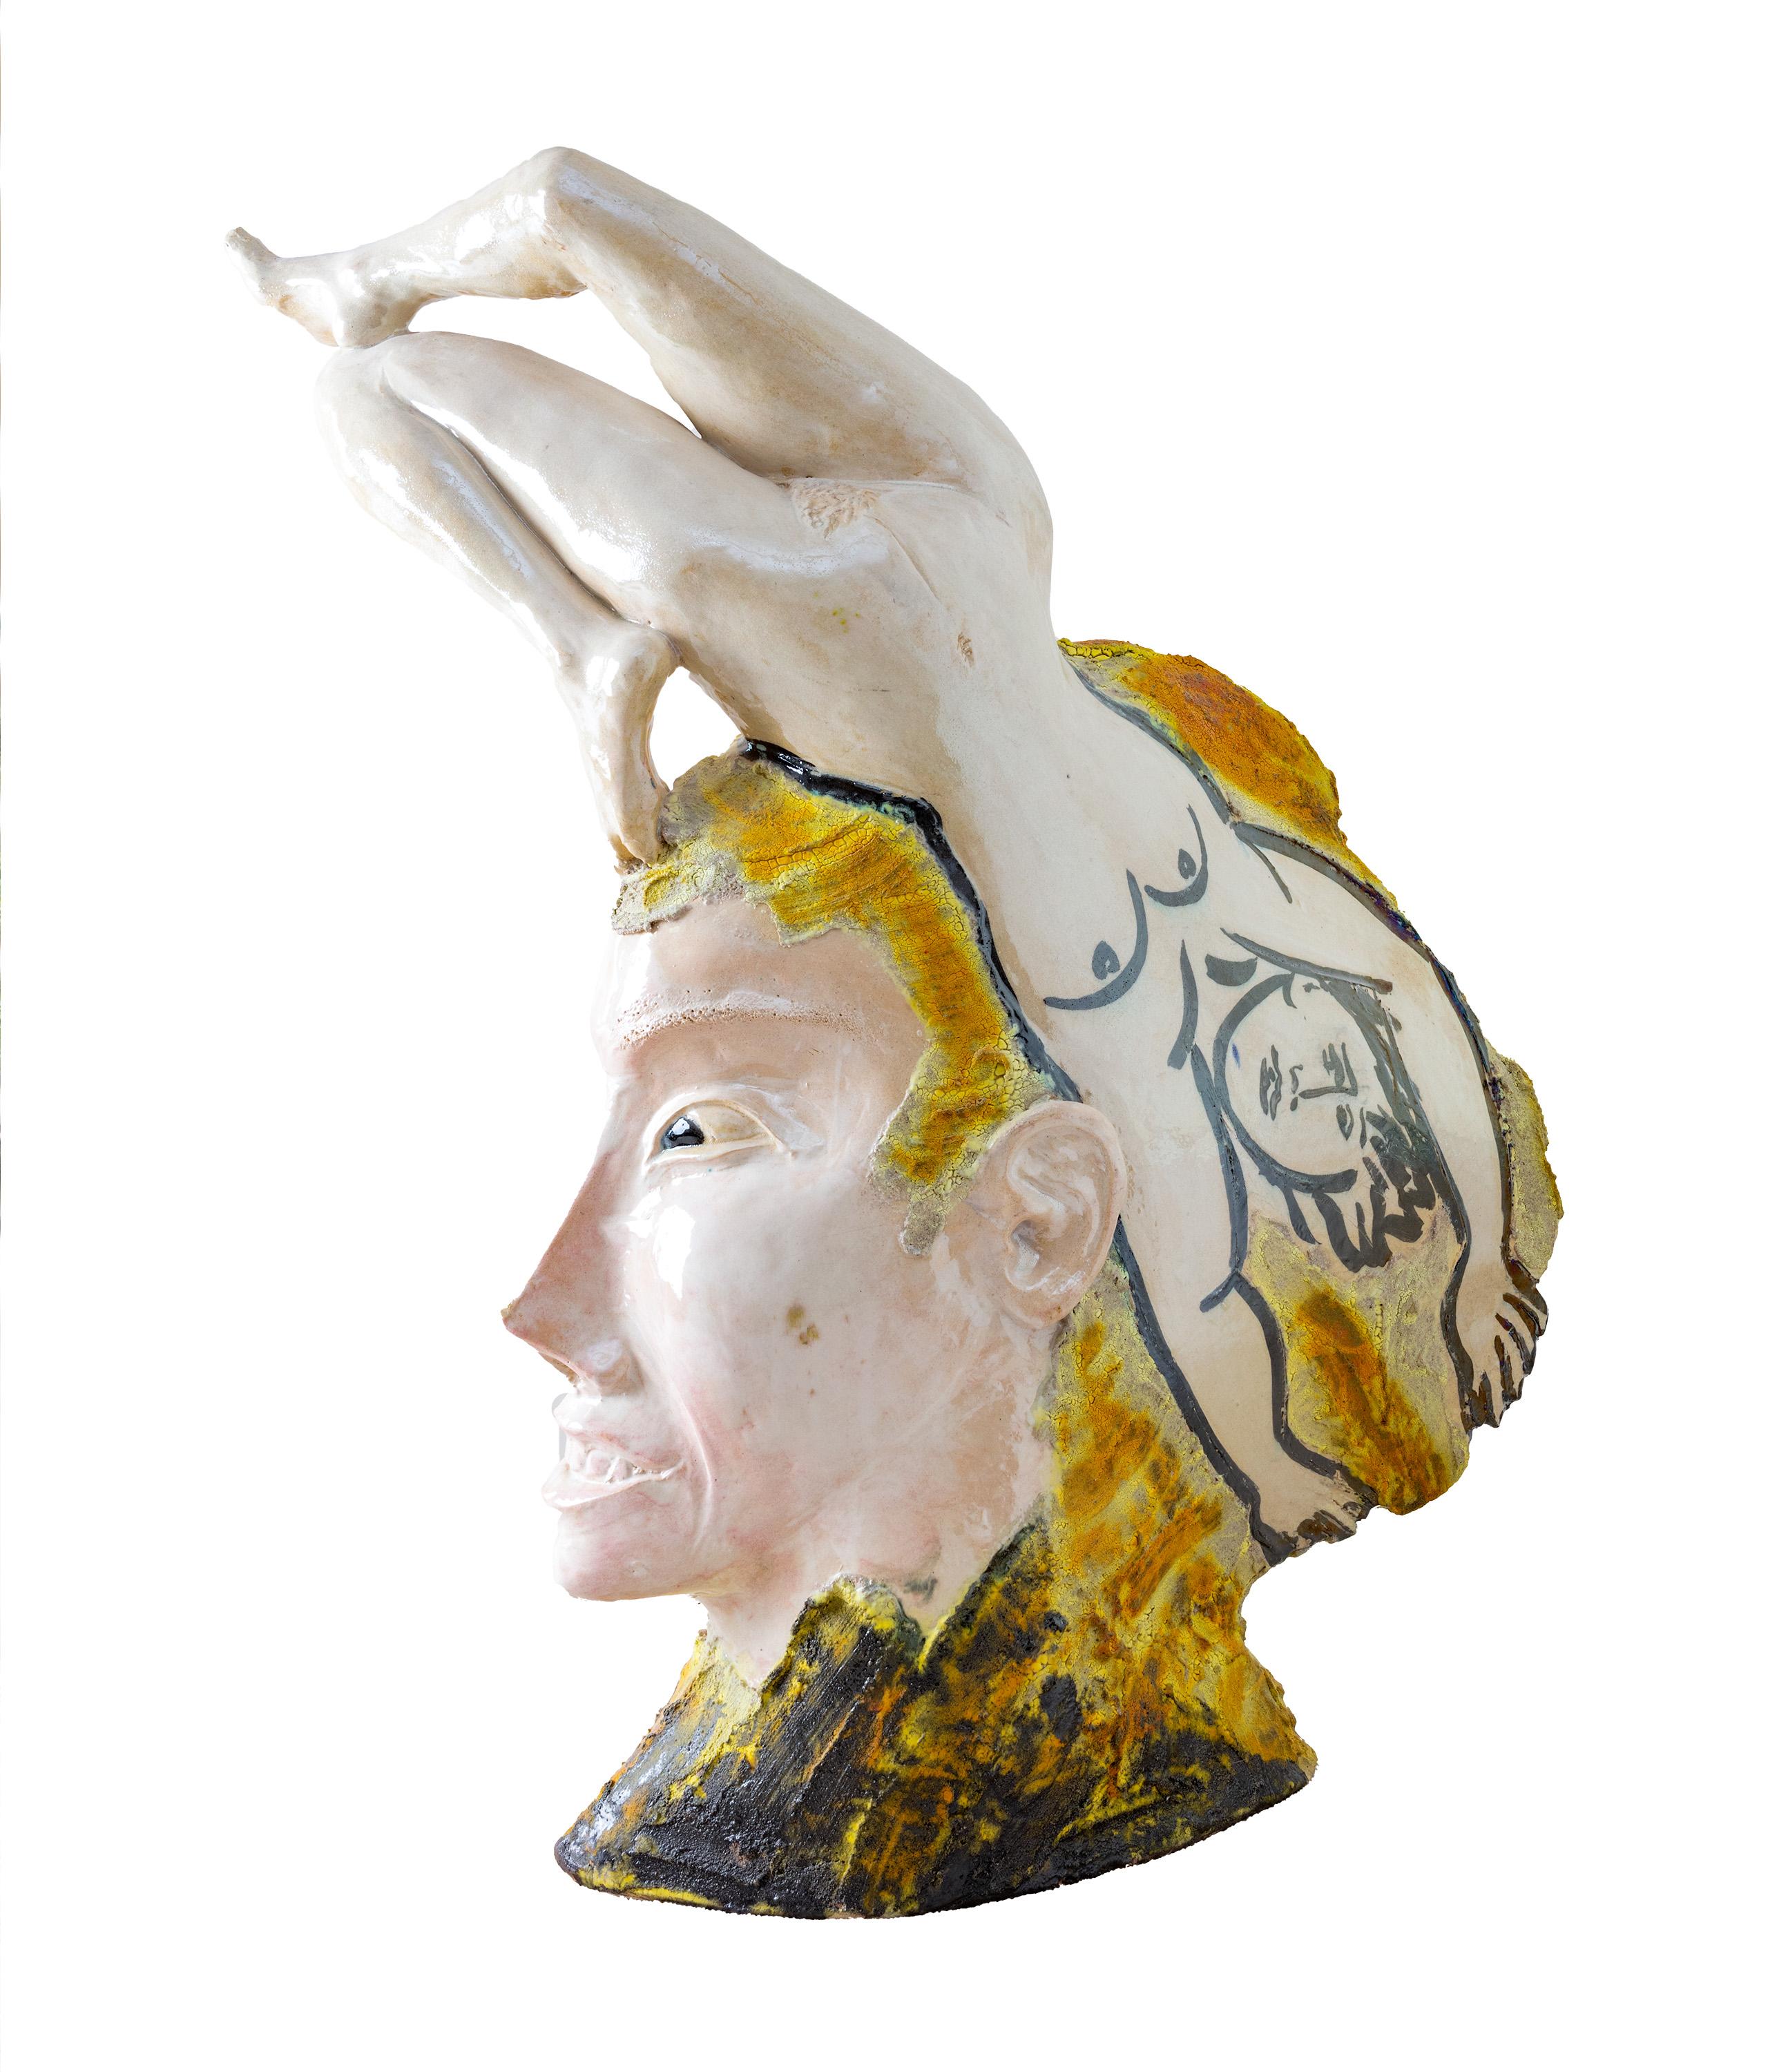 Steven Kemenyffy Nude Sculpture - 'Can't Get Her Off My Mind' Ceramic Sculpture